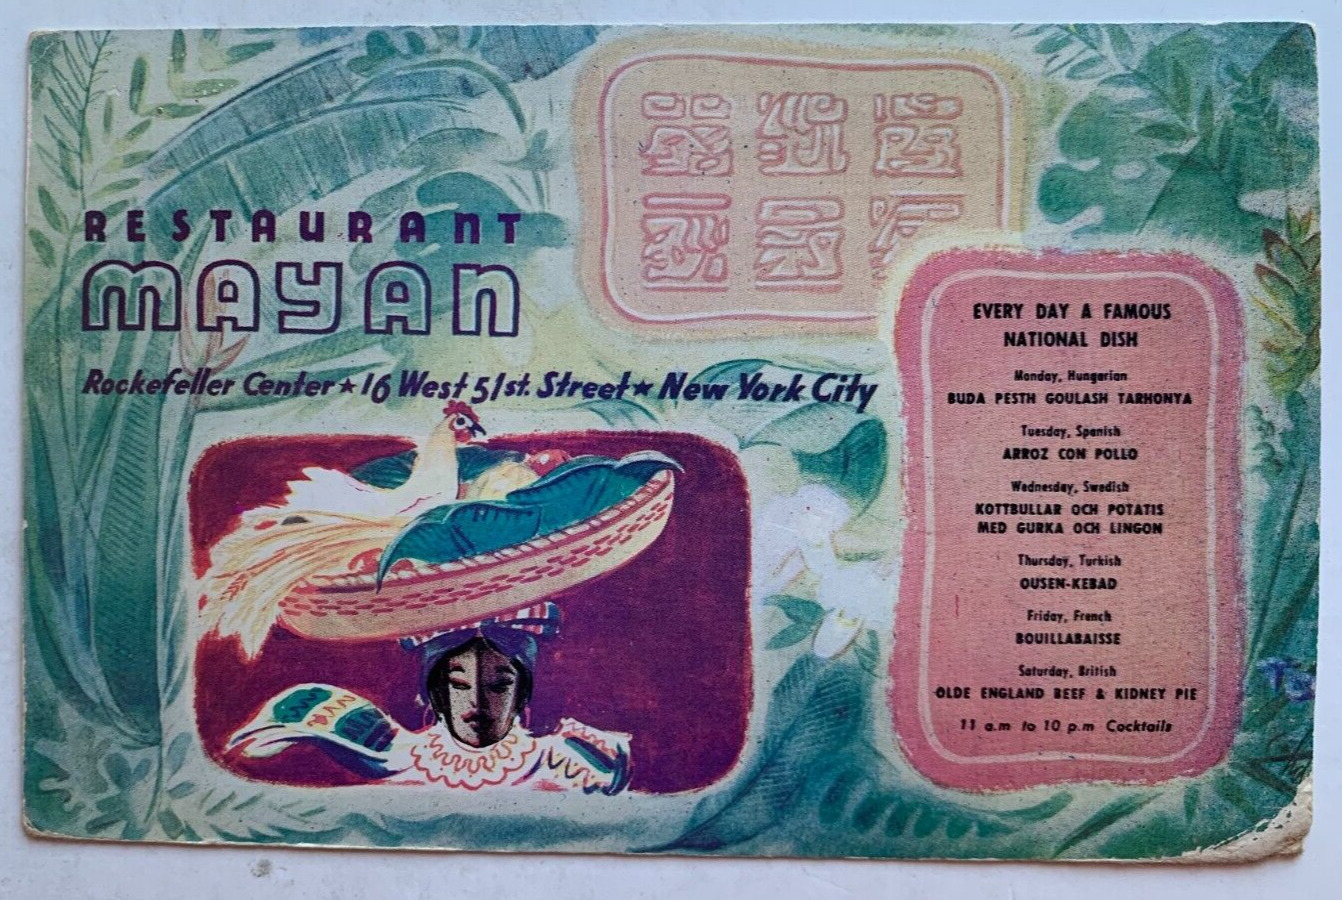 c 1940s NY Postcard NYC New York Restaurant Mayan Rockefeller Center ad menu